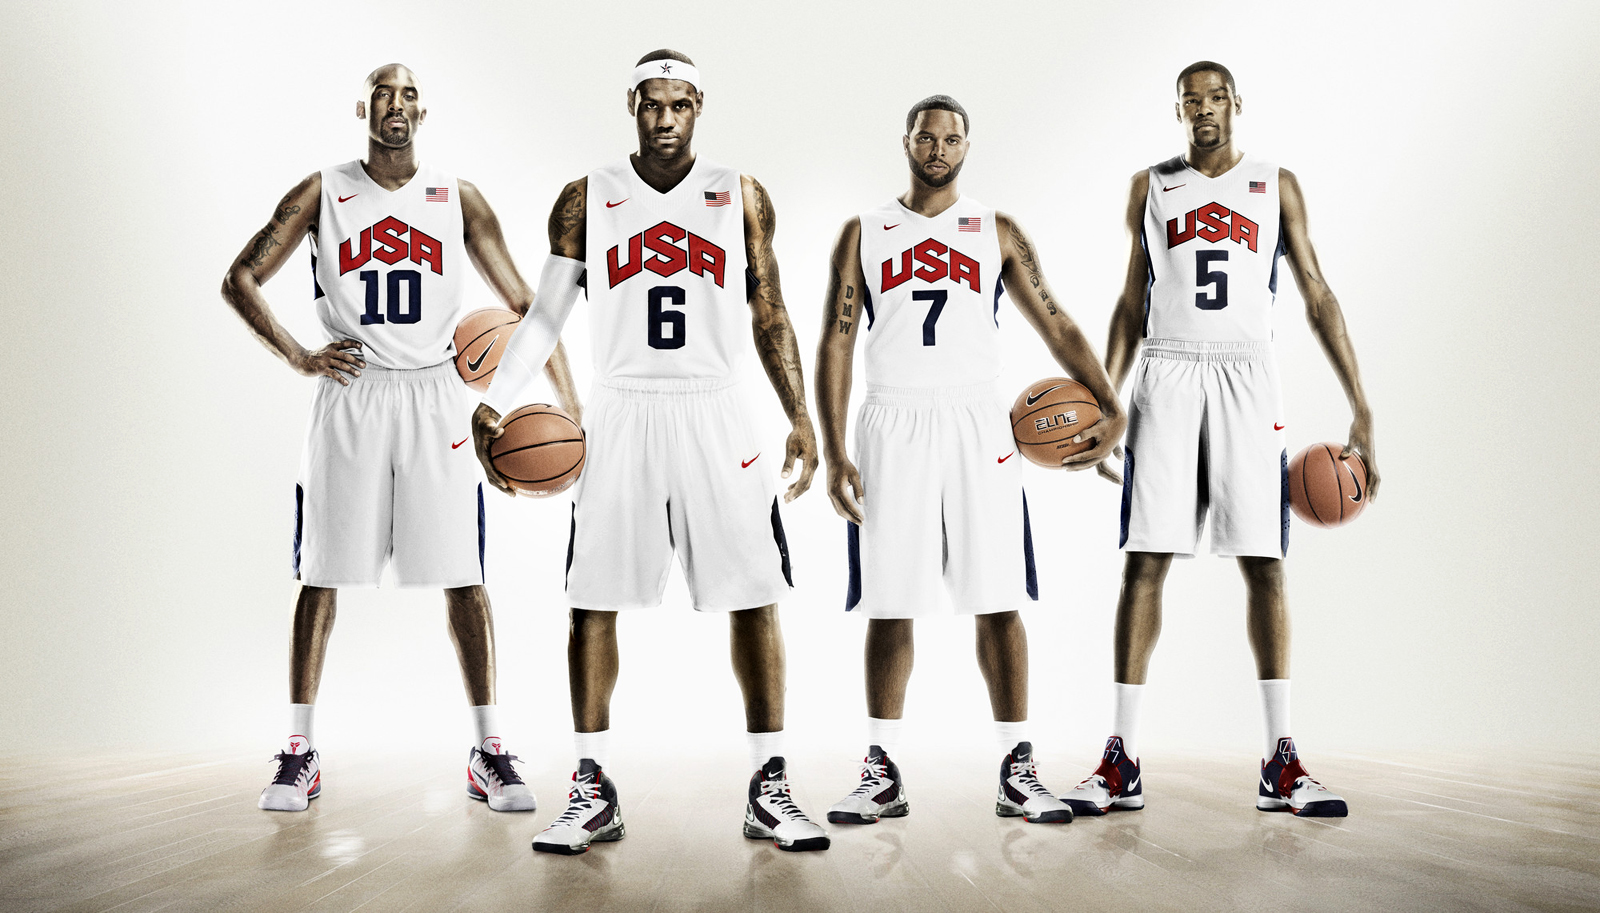 https://blogger.googleusercontent.com/img/b/R29vZ2xl/AVvXsEgWB71EBI_2nl8rTcRJbnqUTYHBTGmUFhyphenhyphenHKZjVCU3604xKdx5D490MBJ598m7ZFhZUiKmfWz89DvSxRF6ACsV6D0Tpl9iINlcSJgASTKu7PwUOJKhNyx3v5c3_v5S5IOKkPHrolGSP6uQ/s1600/Usa_Basketball_Team_Olympics_2012_Nike_HD_Wallpaper-Vvallpaper.Net.jpg